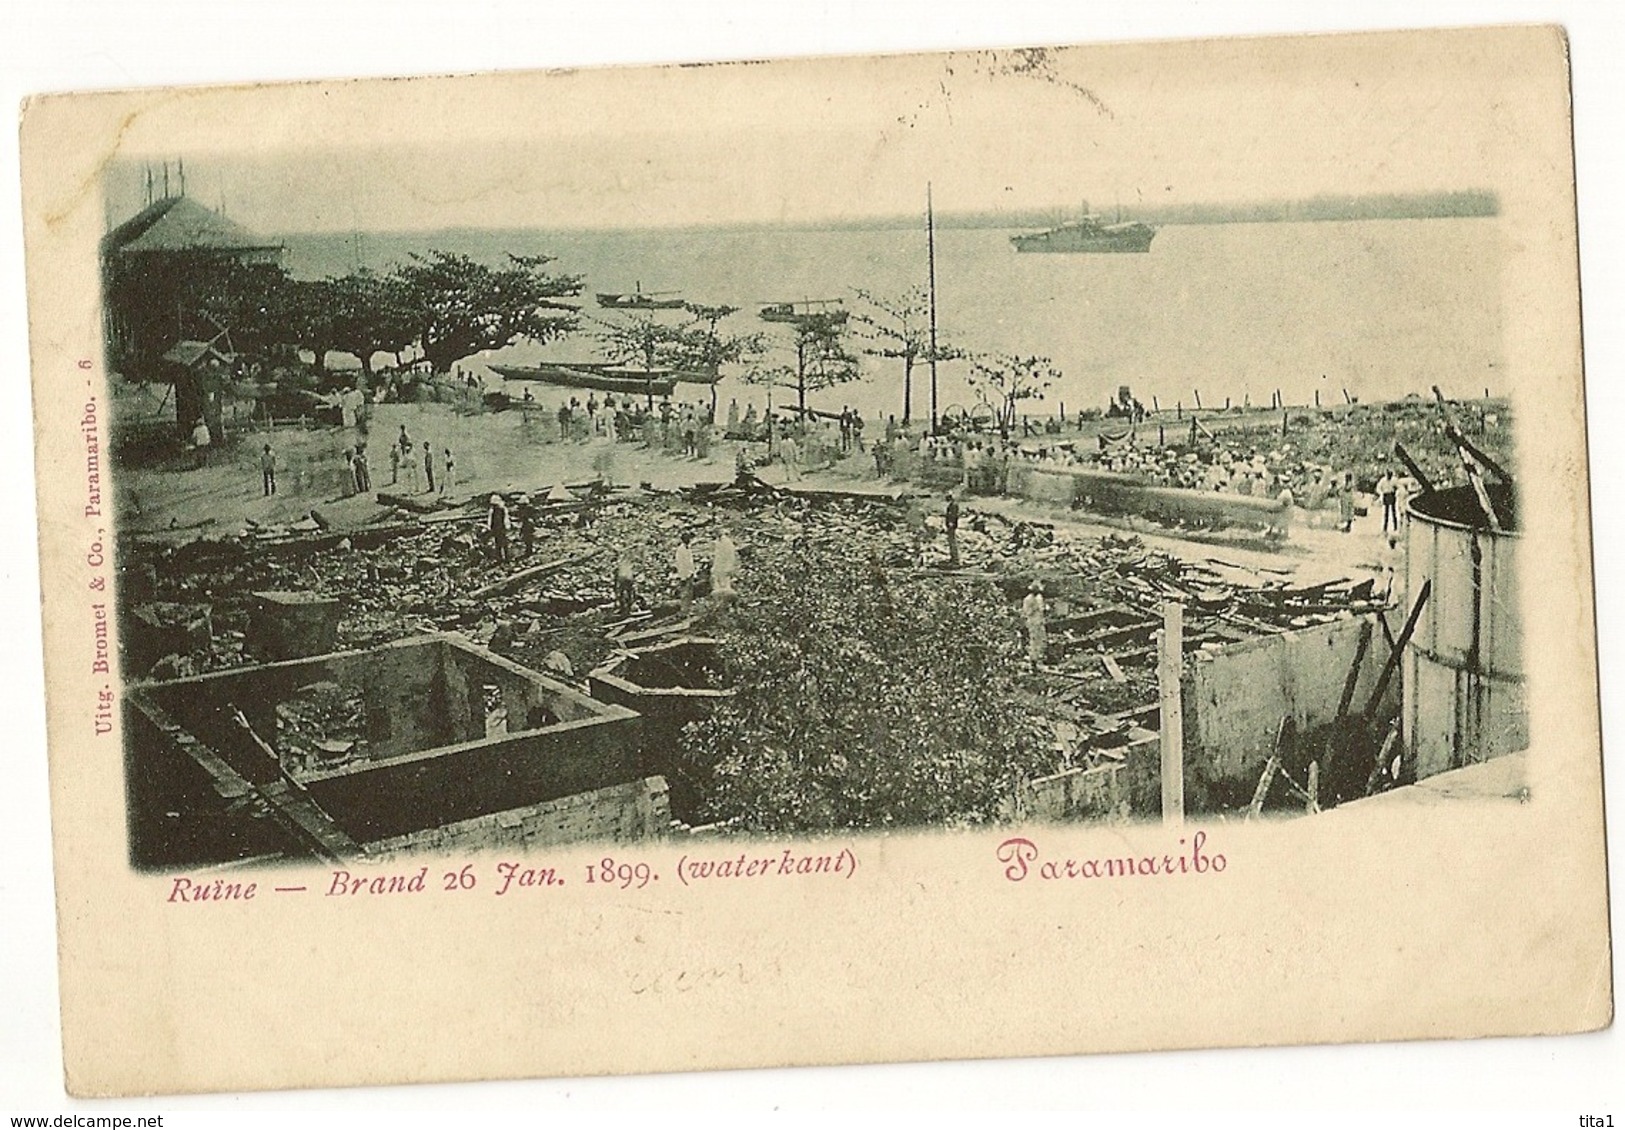 S7704  - Paramaribo - Ruine - Brand 26 Jan. 1899 - Suriname